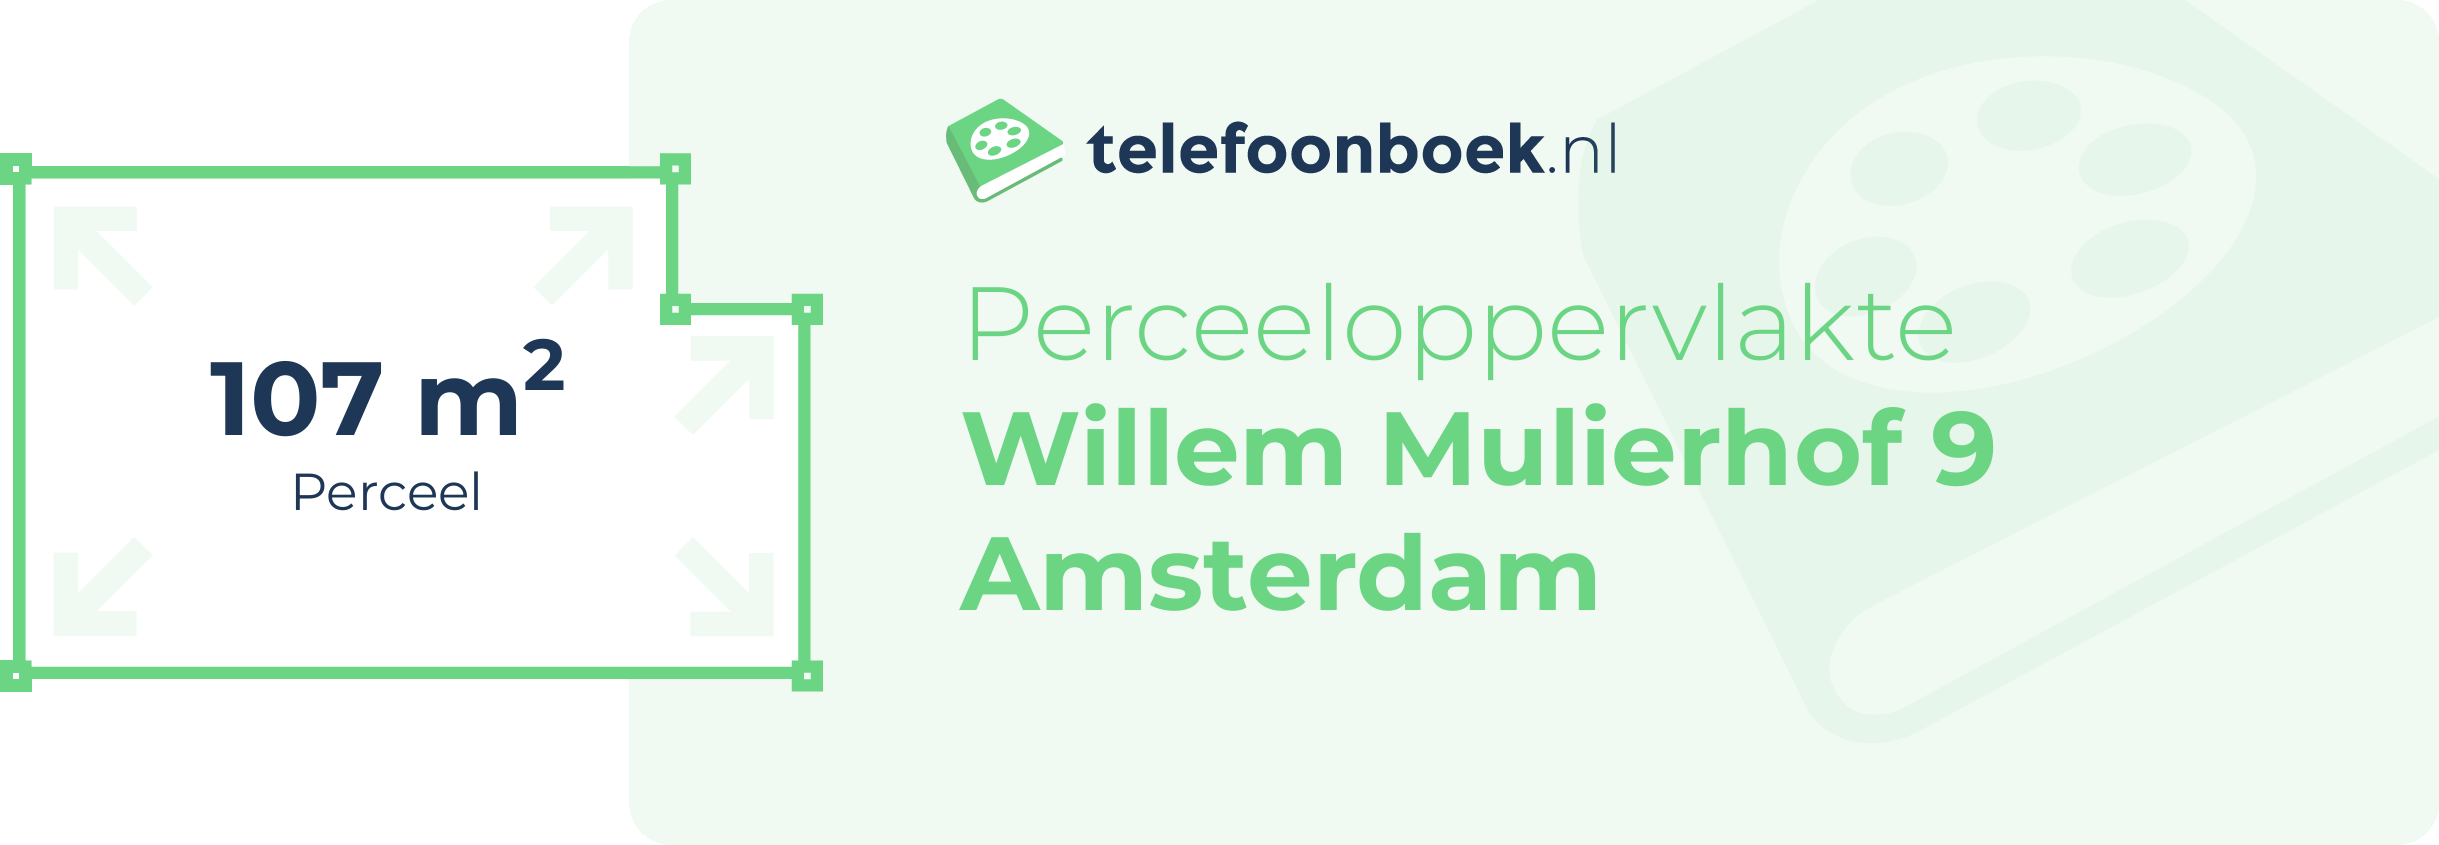 Perceeloppervlakte Willem Mulierhof 9 Amsterdam